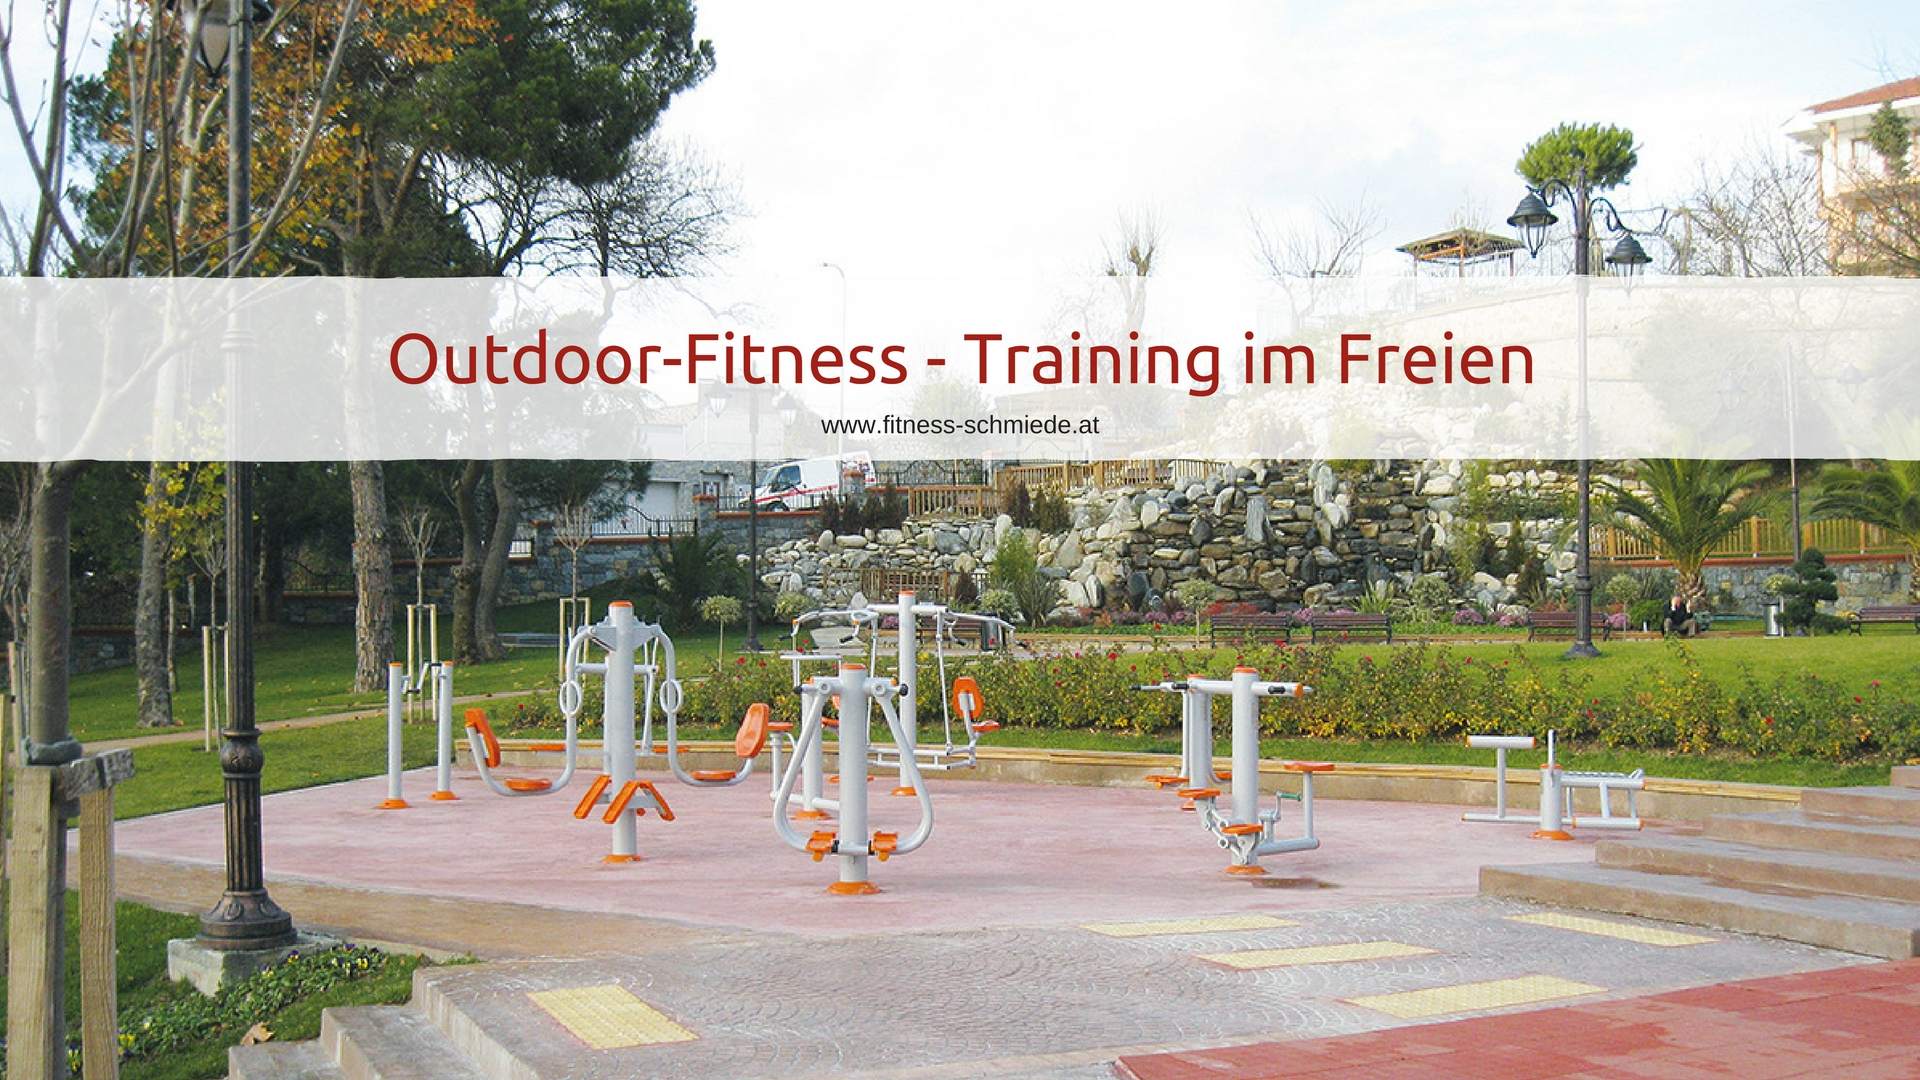 Outdoor-Fitness - Training im Freien